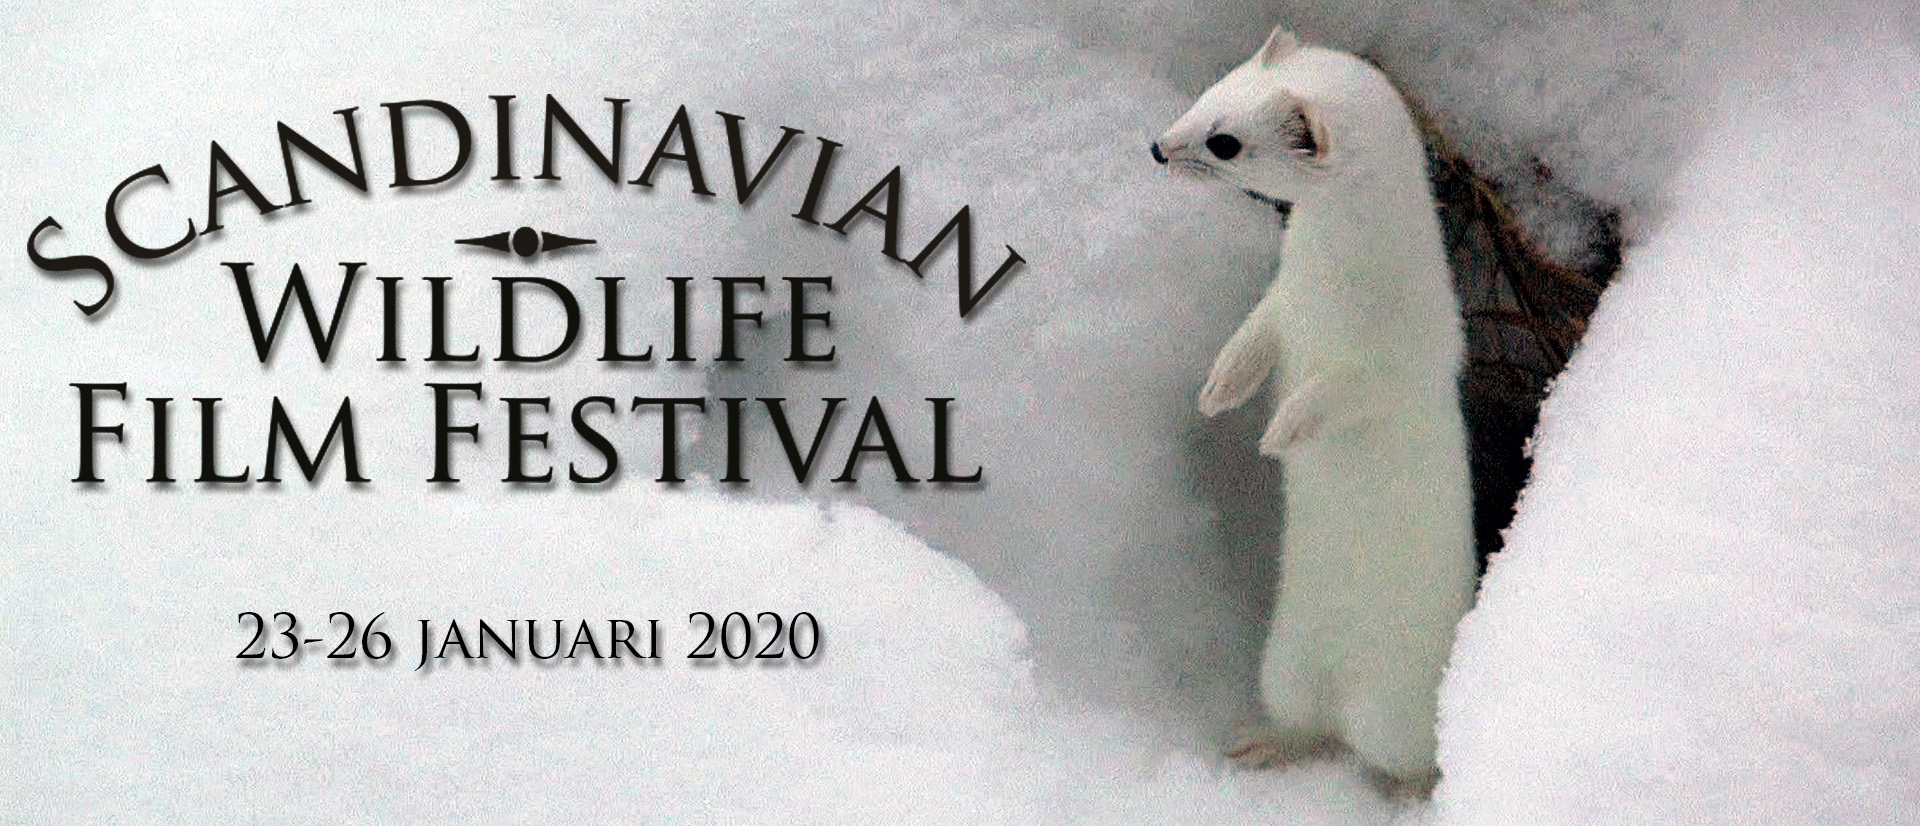 Scandinavian Wildlife Film Festival - fotograf Sigurd Jonsson